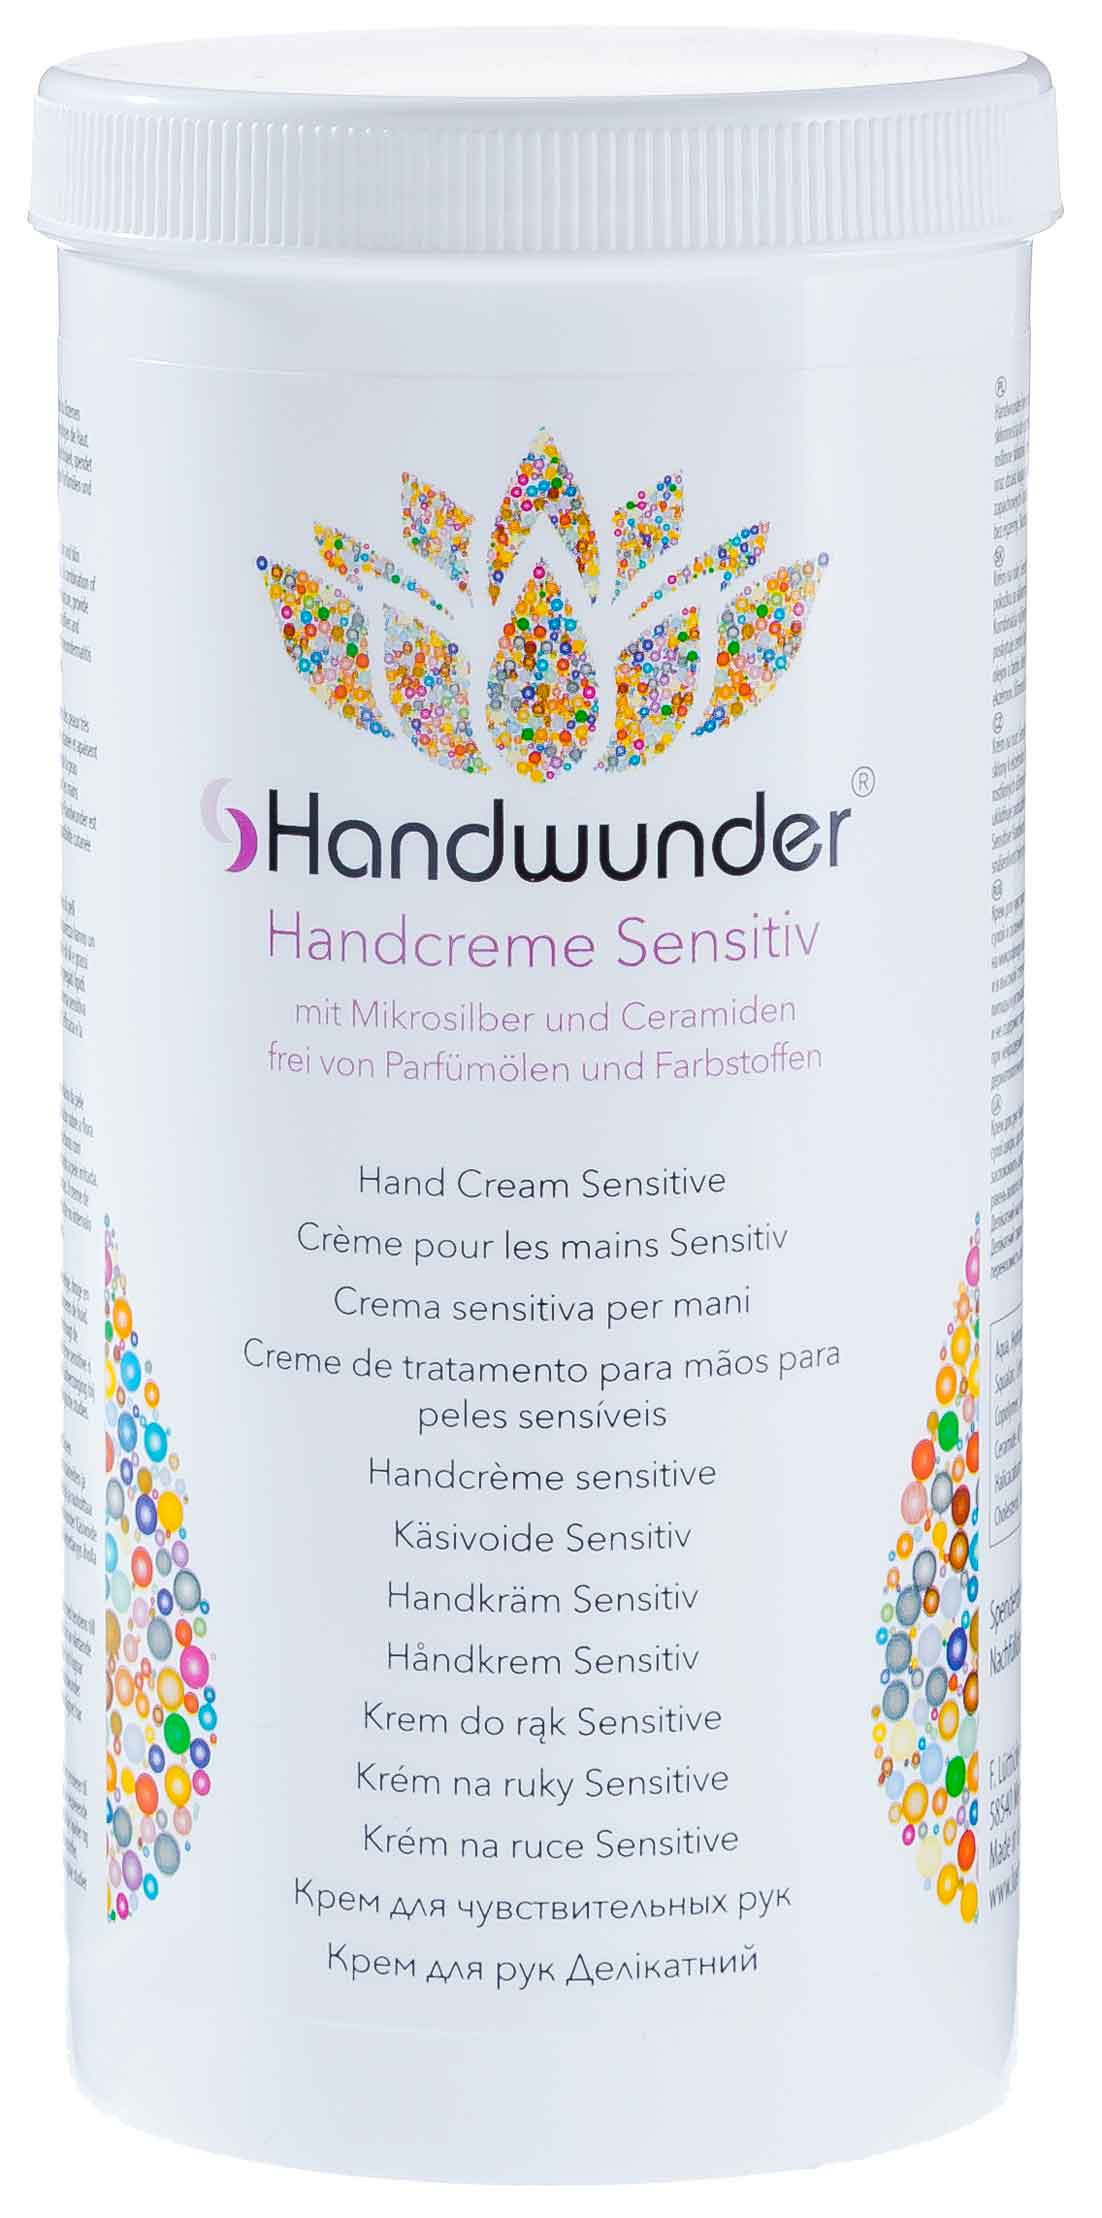 Handwunder Handcreme Sensitiv 450 ml Refill